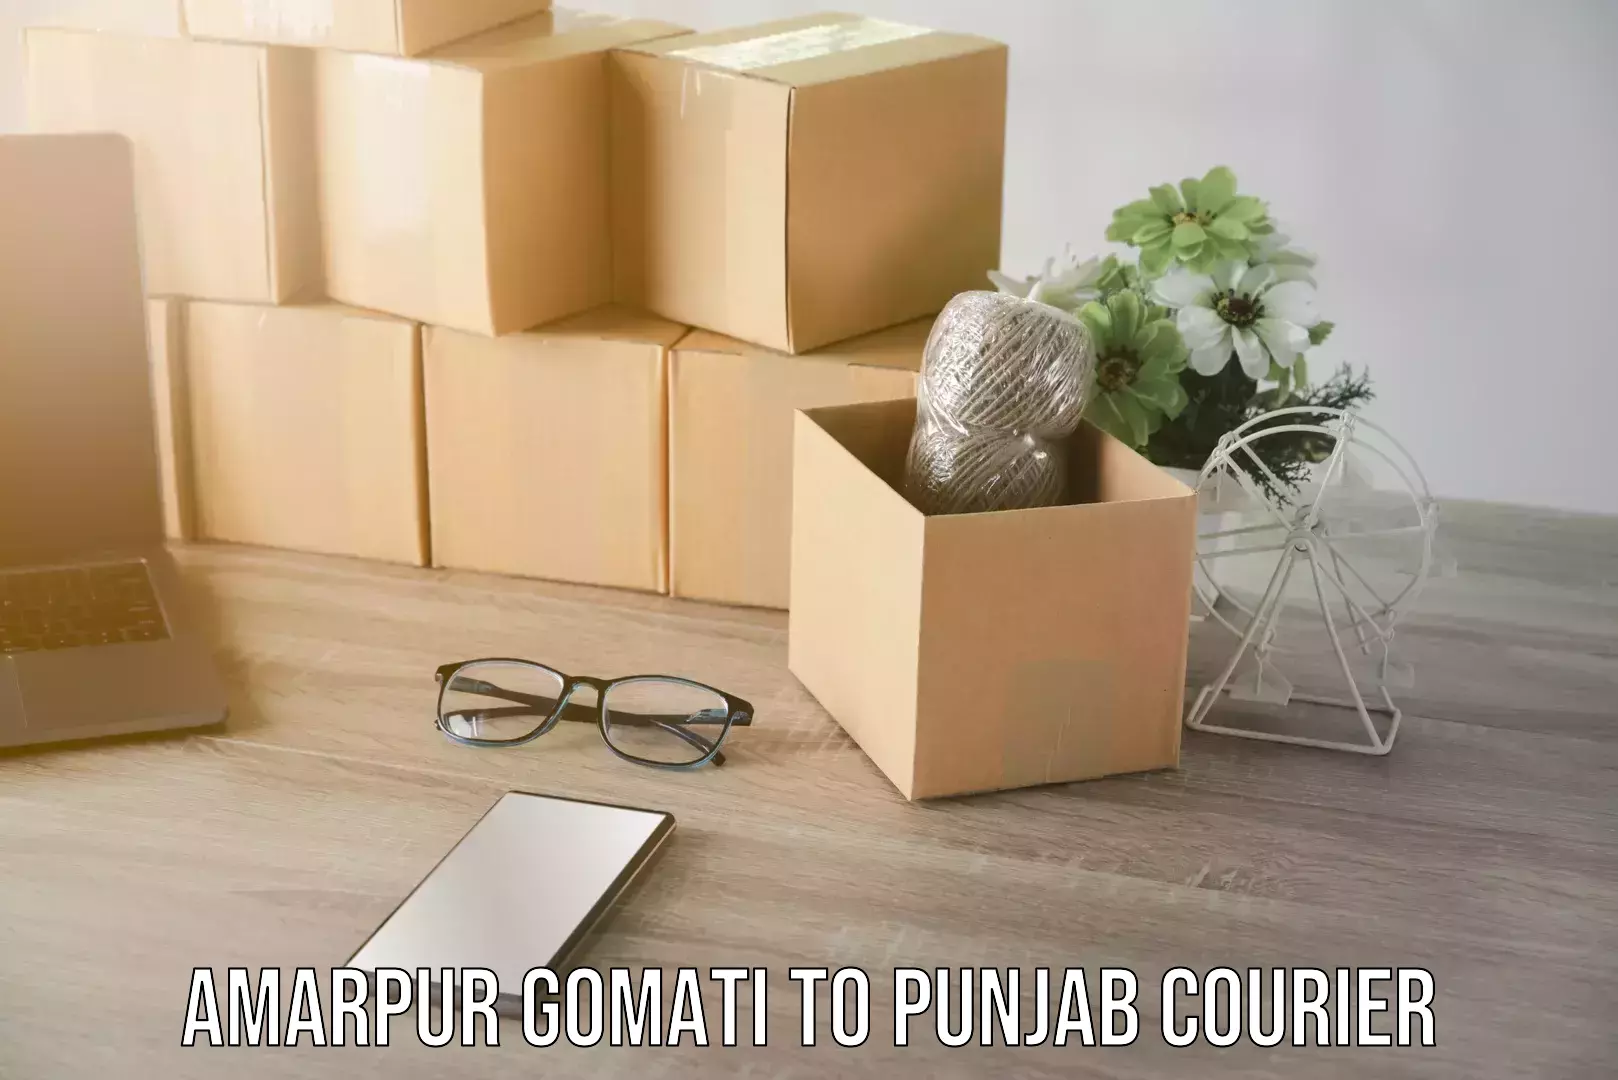 Automated shipping processes Amarpur Gomati to Punjab